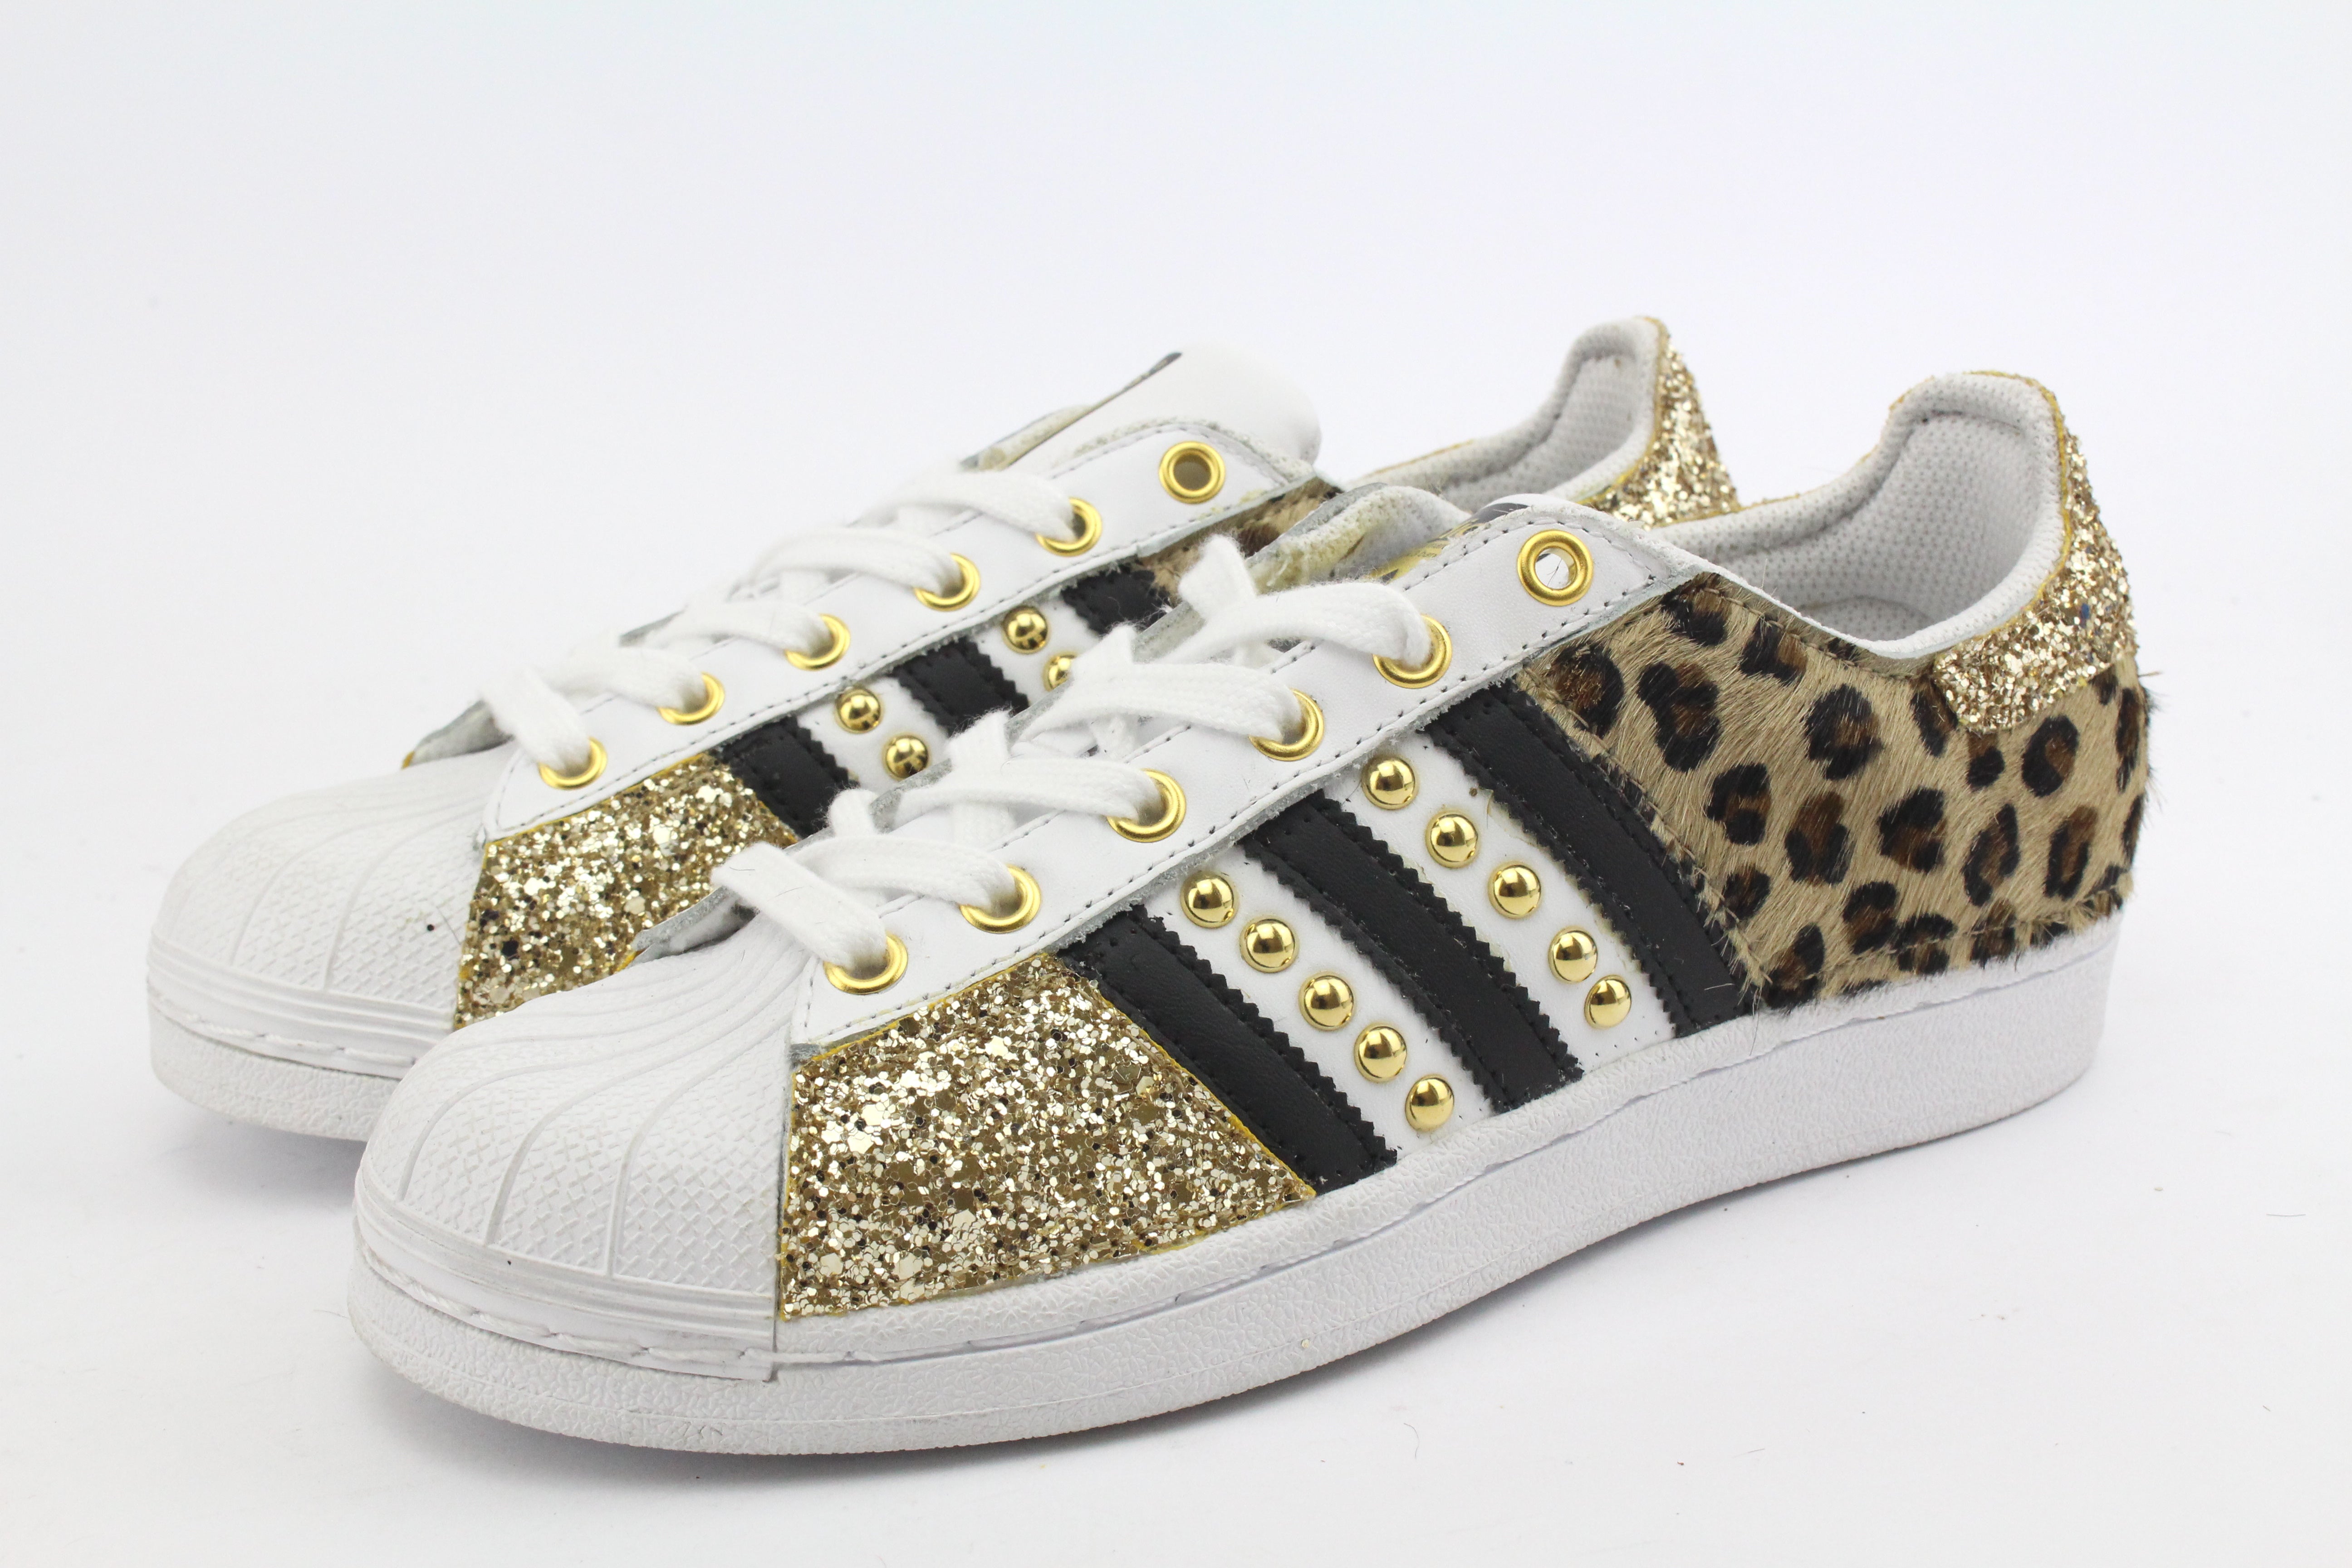 Adidas Superstar Maculate Glitter Gold & Borchie